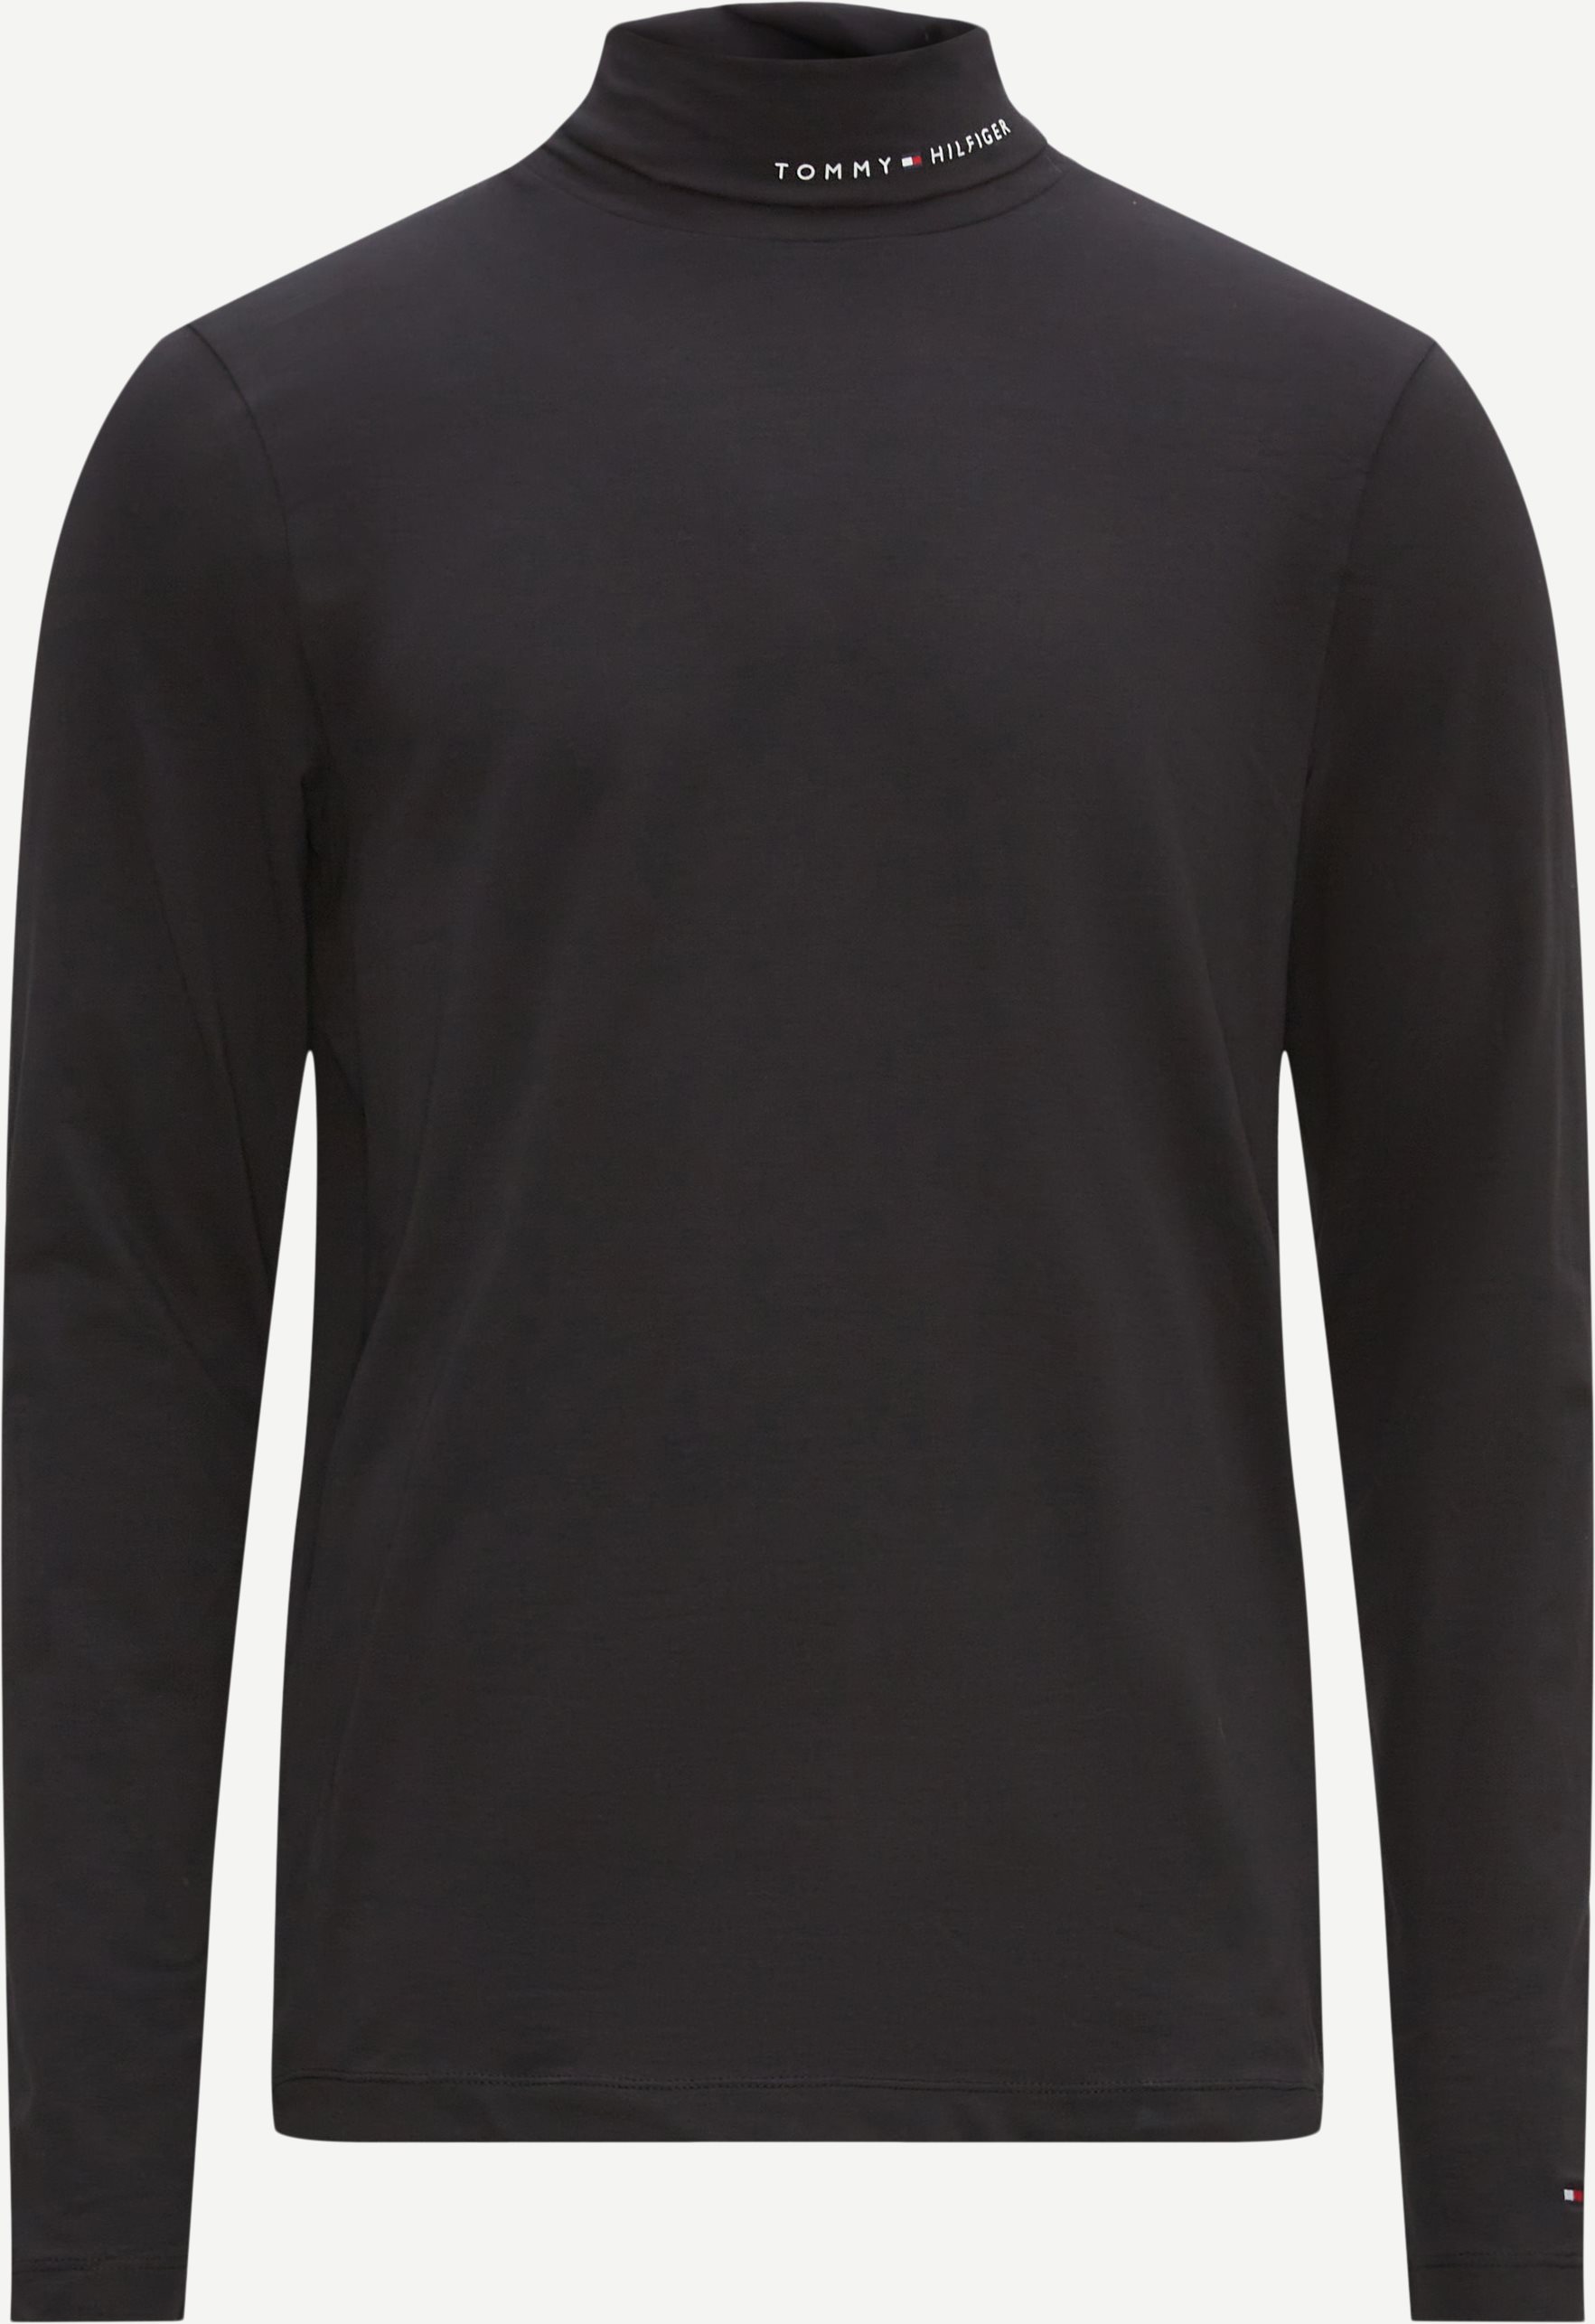 Tommy Hilfiger T-shirts 28787 ROLL NECK TOMMY LOGO LS Black